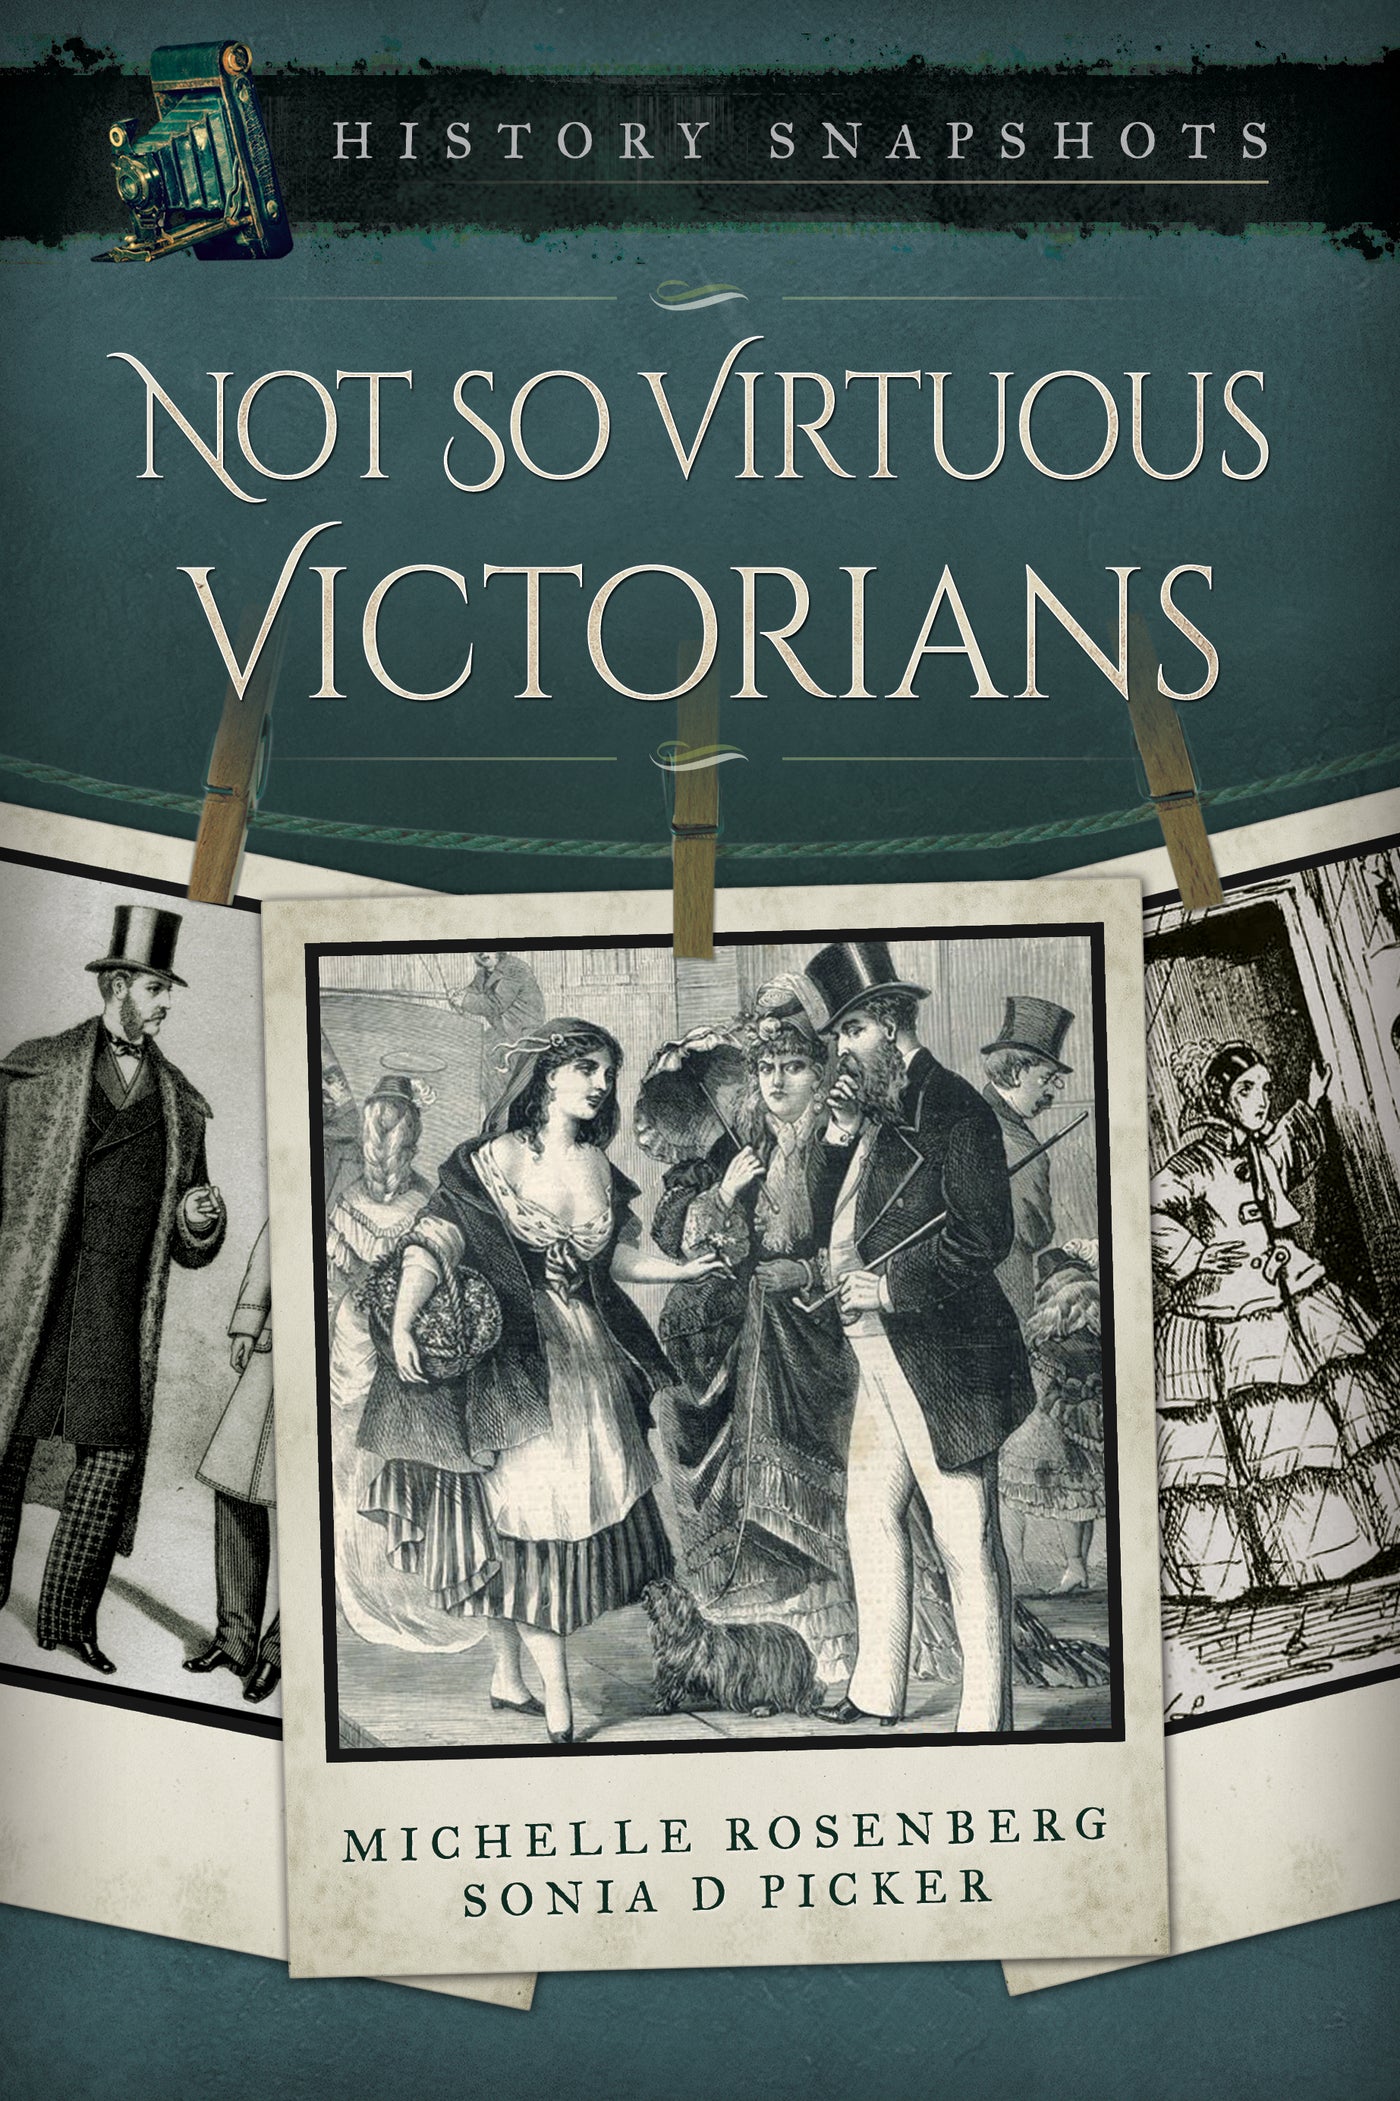 Not So Virtuous Victorians